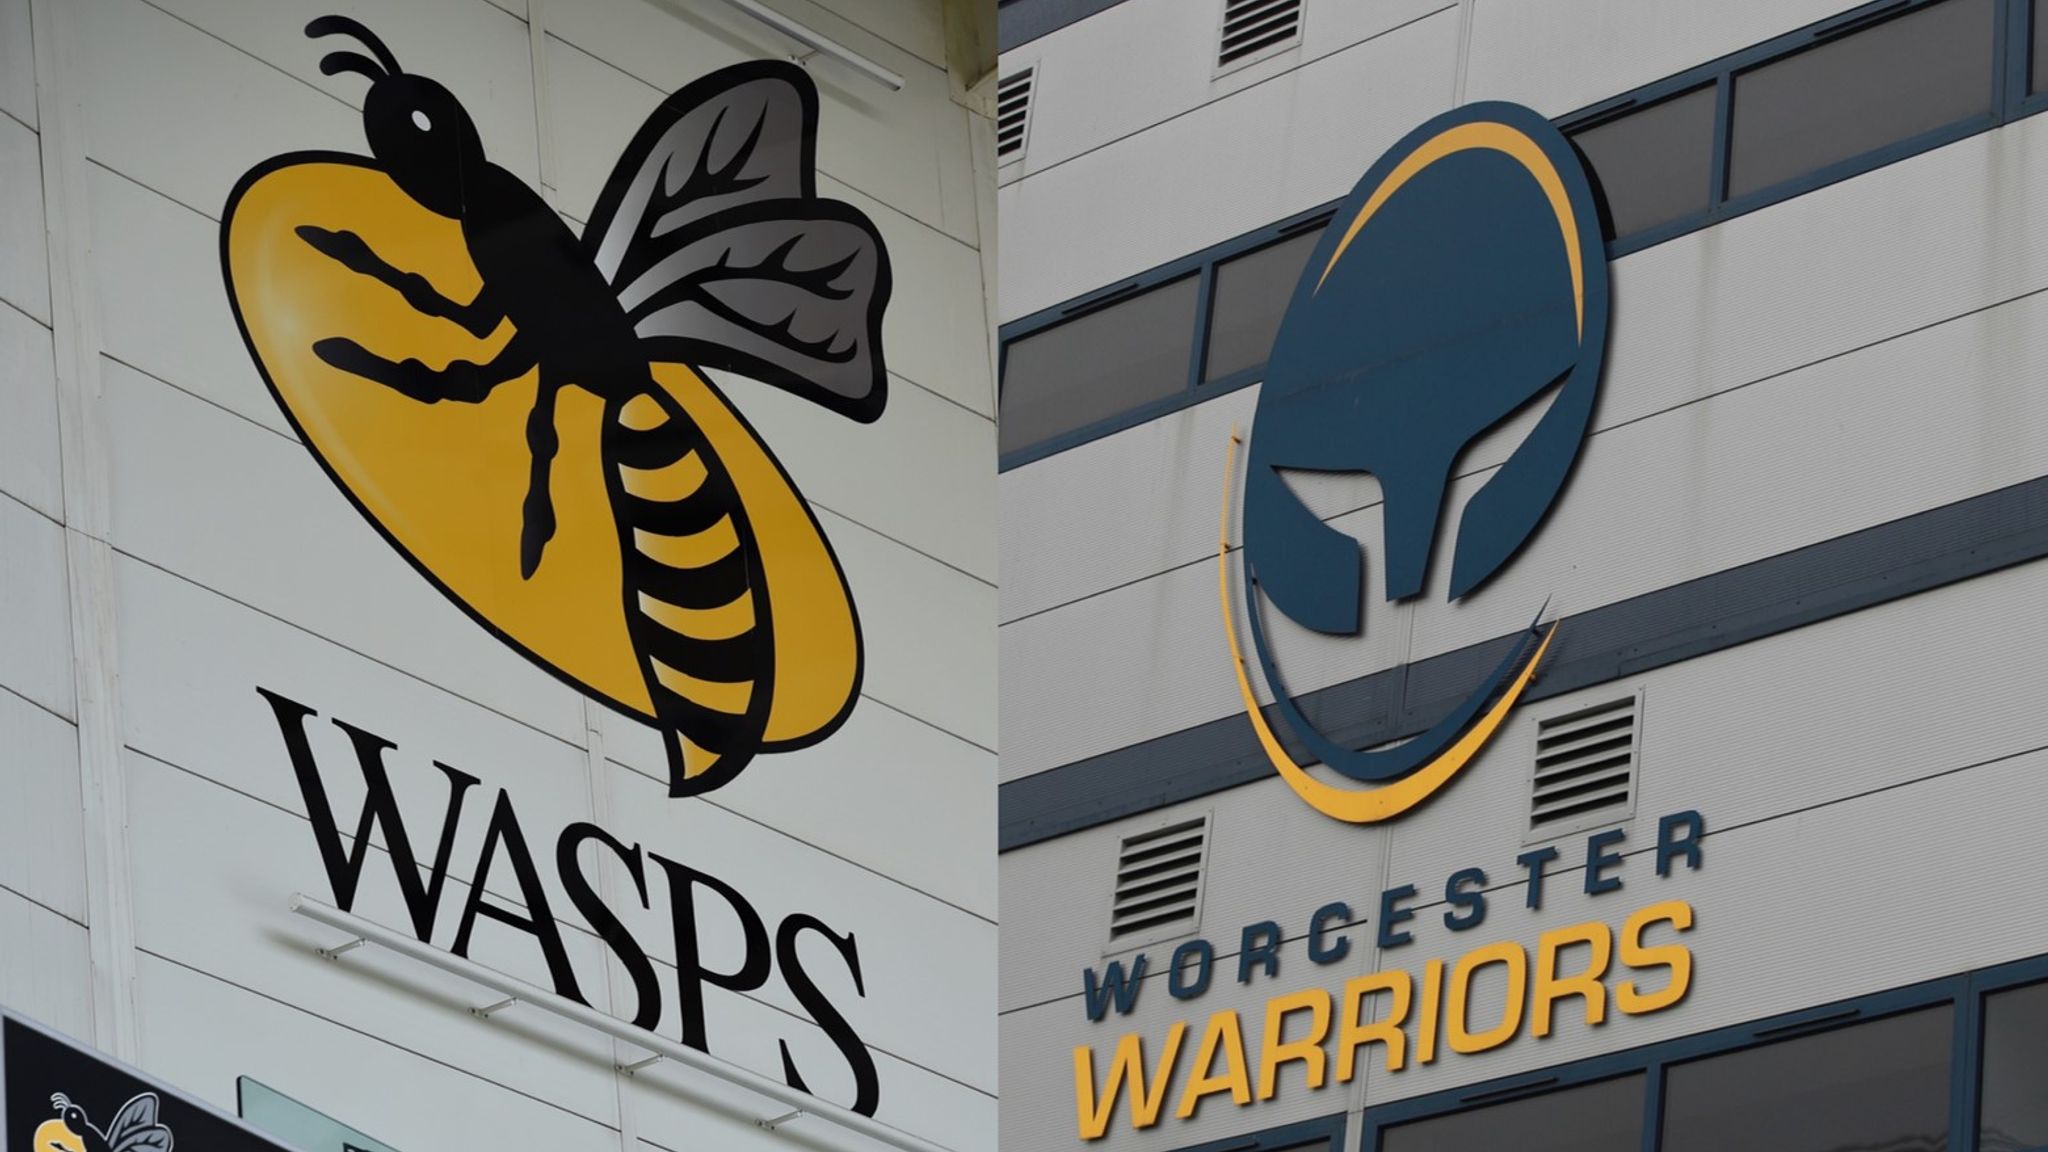 Worcester Warriors - Wikipedia